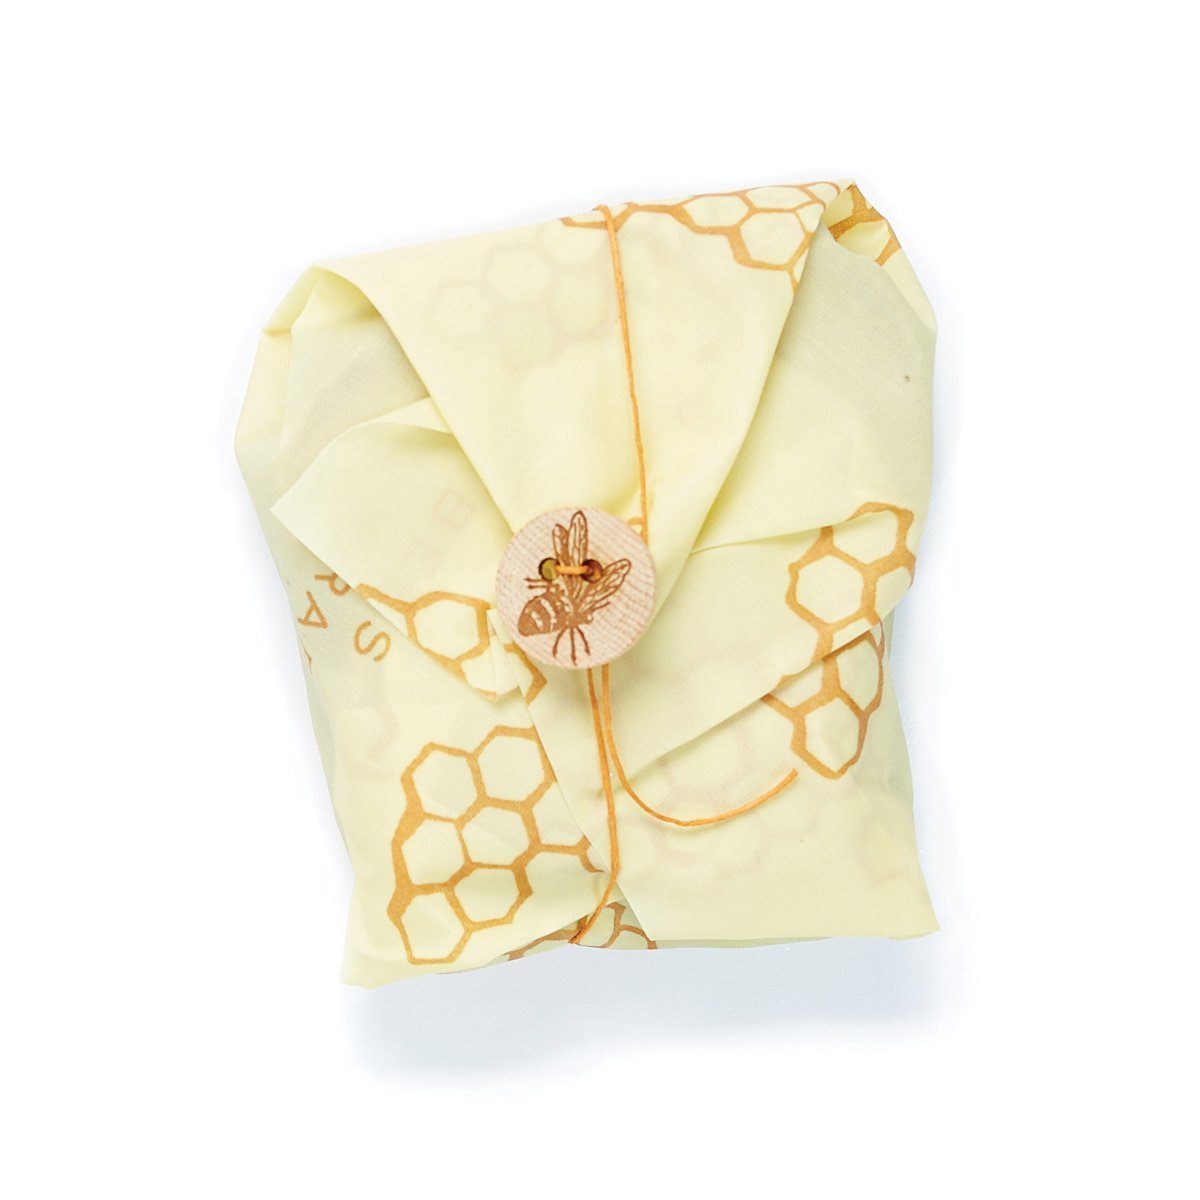 Bee's Wrap - Sandwich Wrap - Honeycomb Print - Gift & Gather